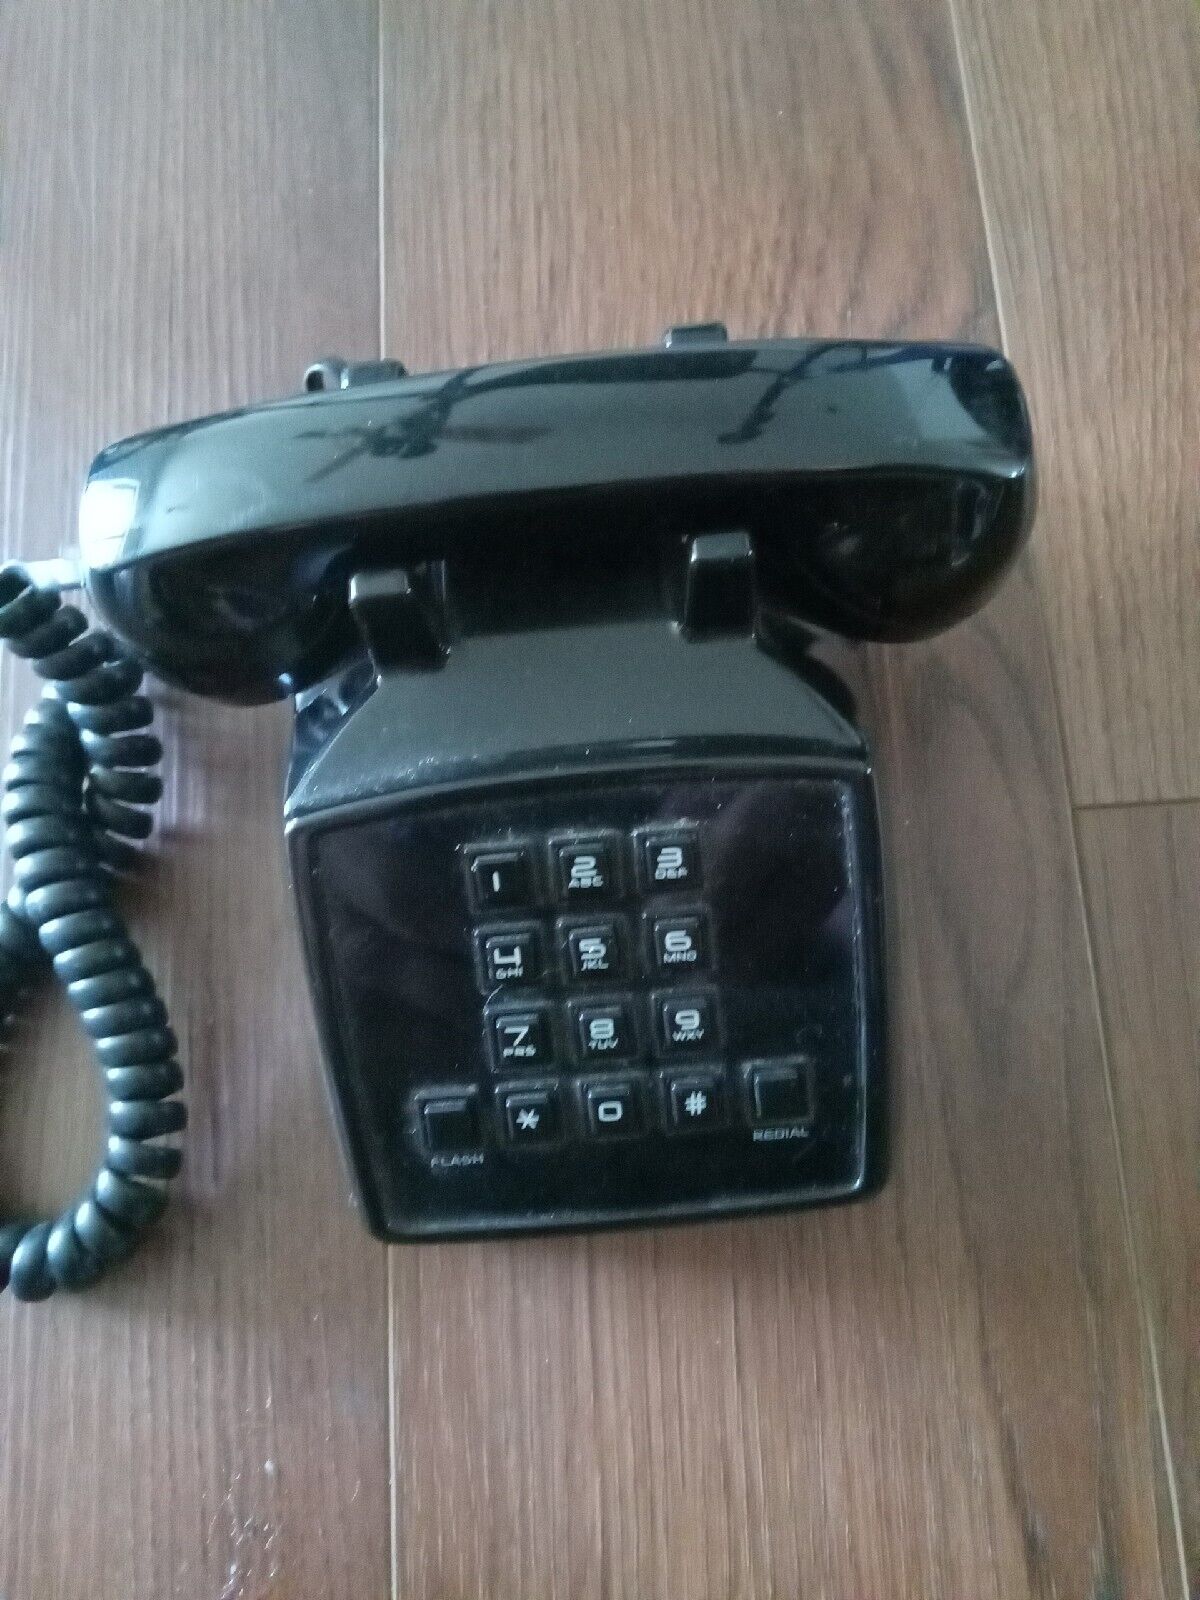 Polyconcept Black Mini Phone Retro Push Button Vintage Landline Telephone Rare